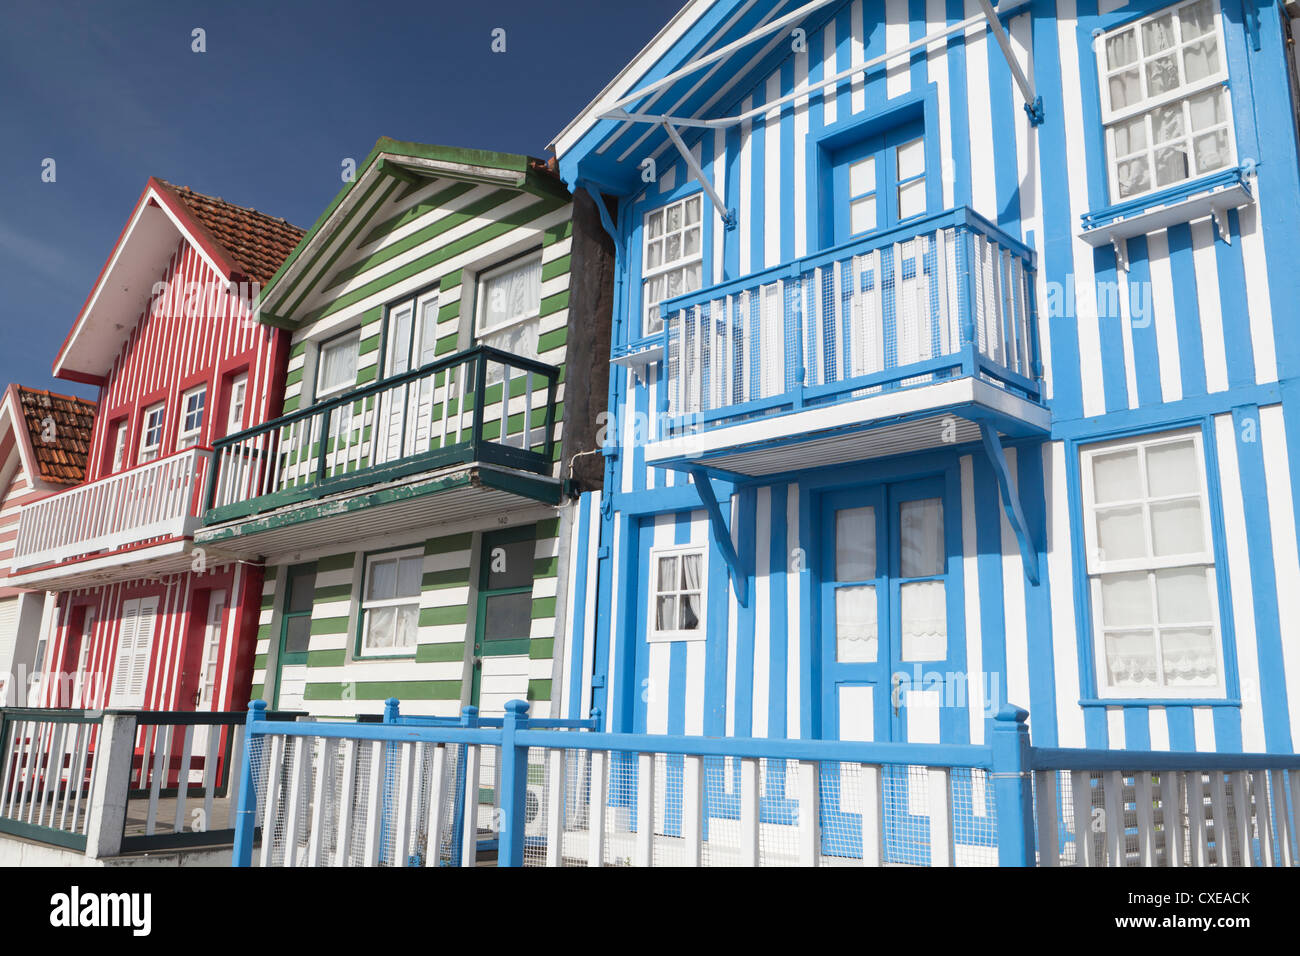 Maisons de Plage colorés traditionnels à Costa Nova, Costa de Prata, Beira Litoral, Aveiro, Portugal Banque D'Images